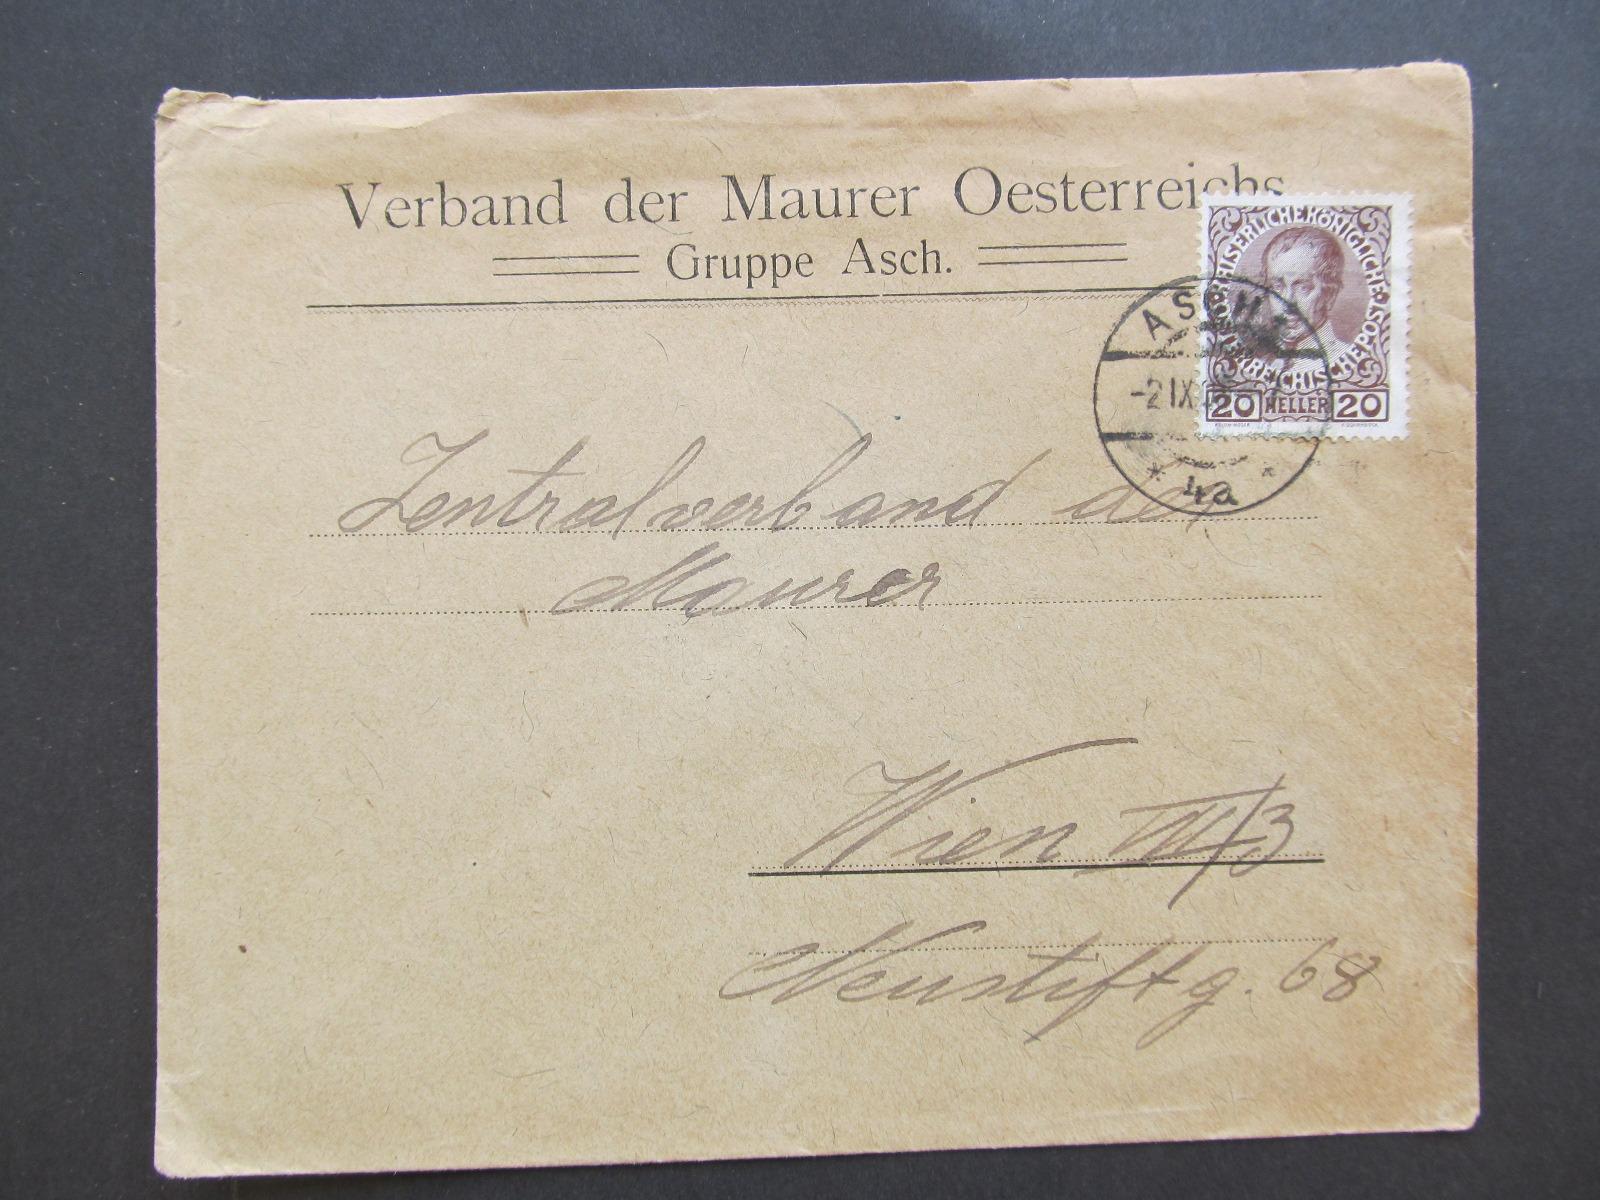 p8608 Asch Aś - Wien Zväz murárov Verband der Maurer - Filatelia